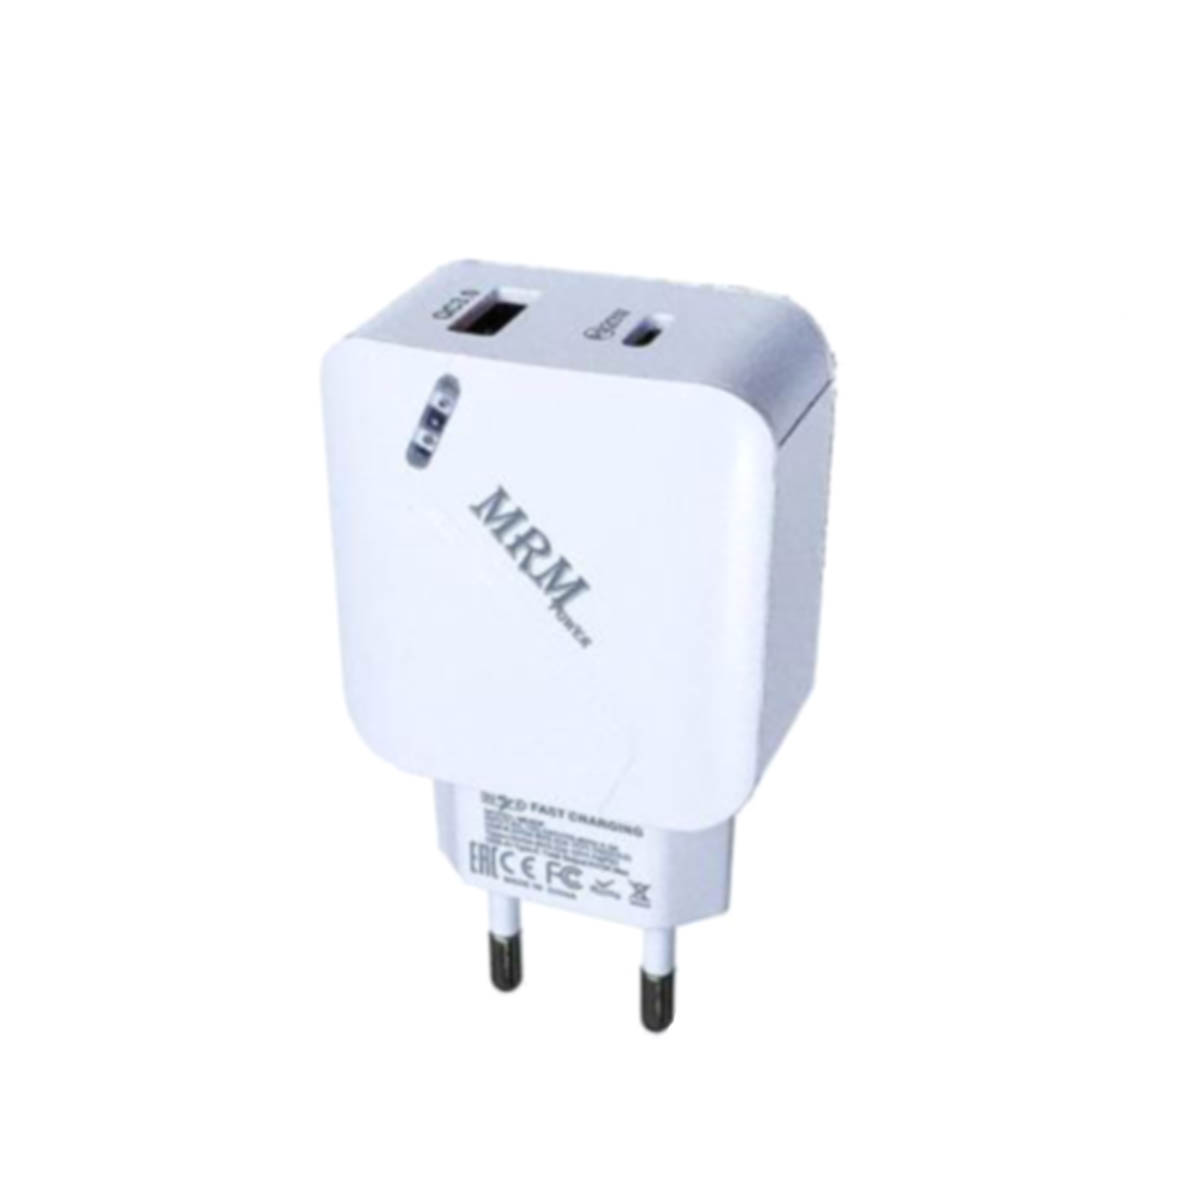 СЗУ (Сетевое зарядное устройство) MRM MR820C, PD 20W, QC 3.0, 1 USB, 1 Type C, цвет белый